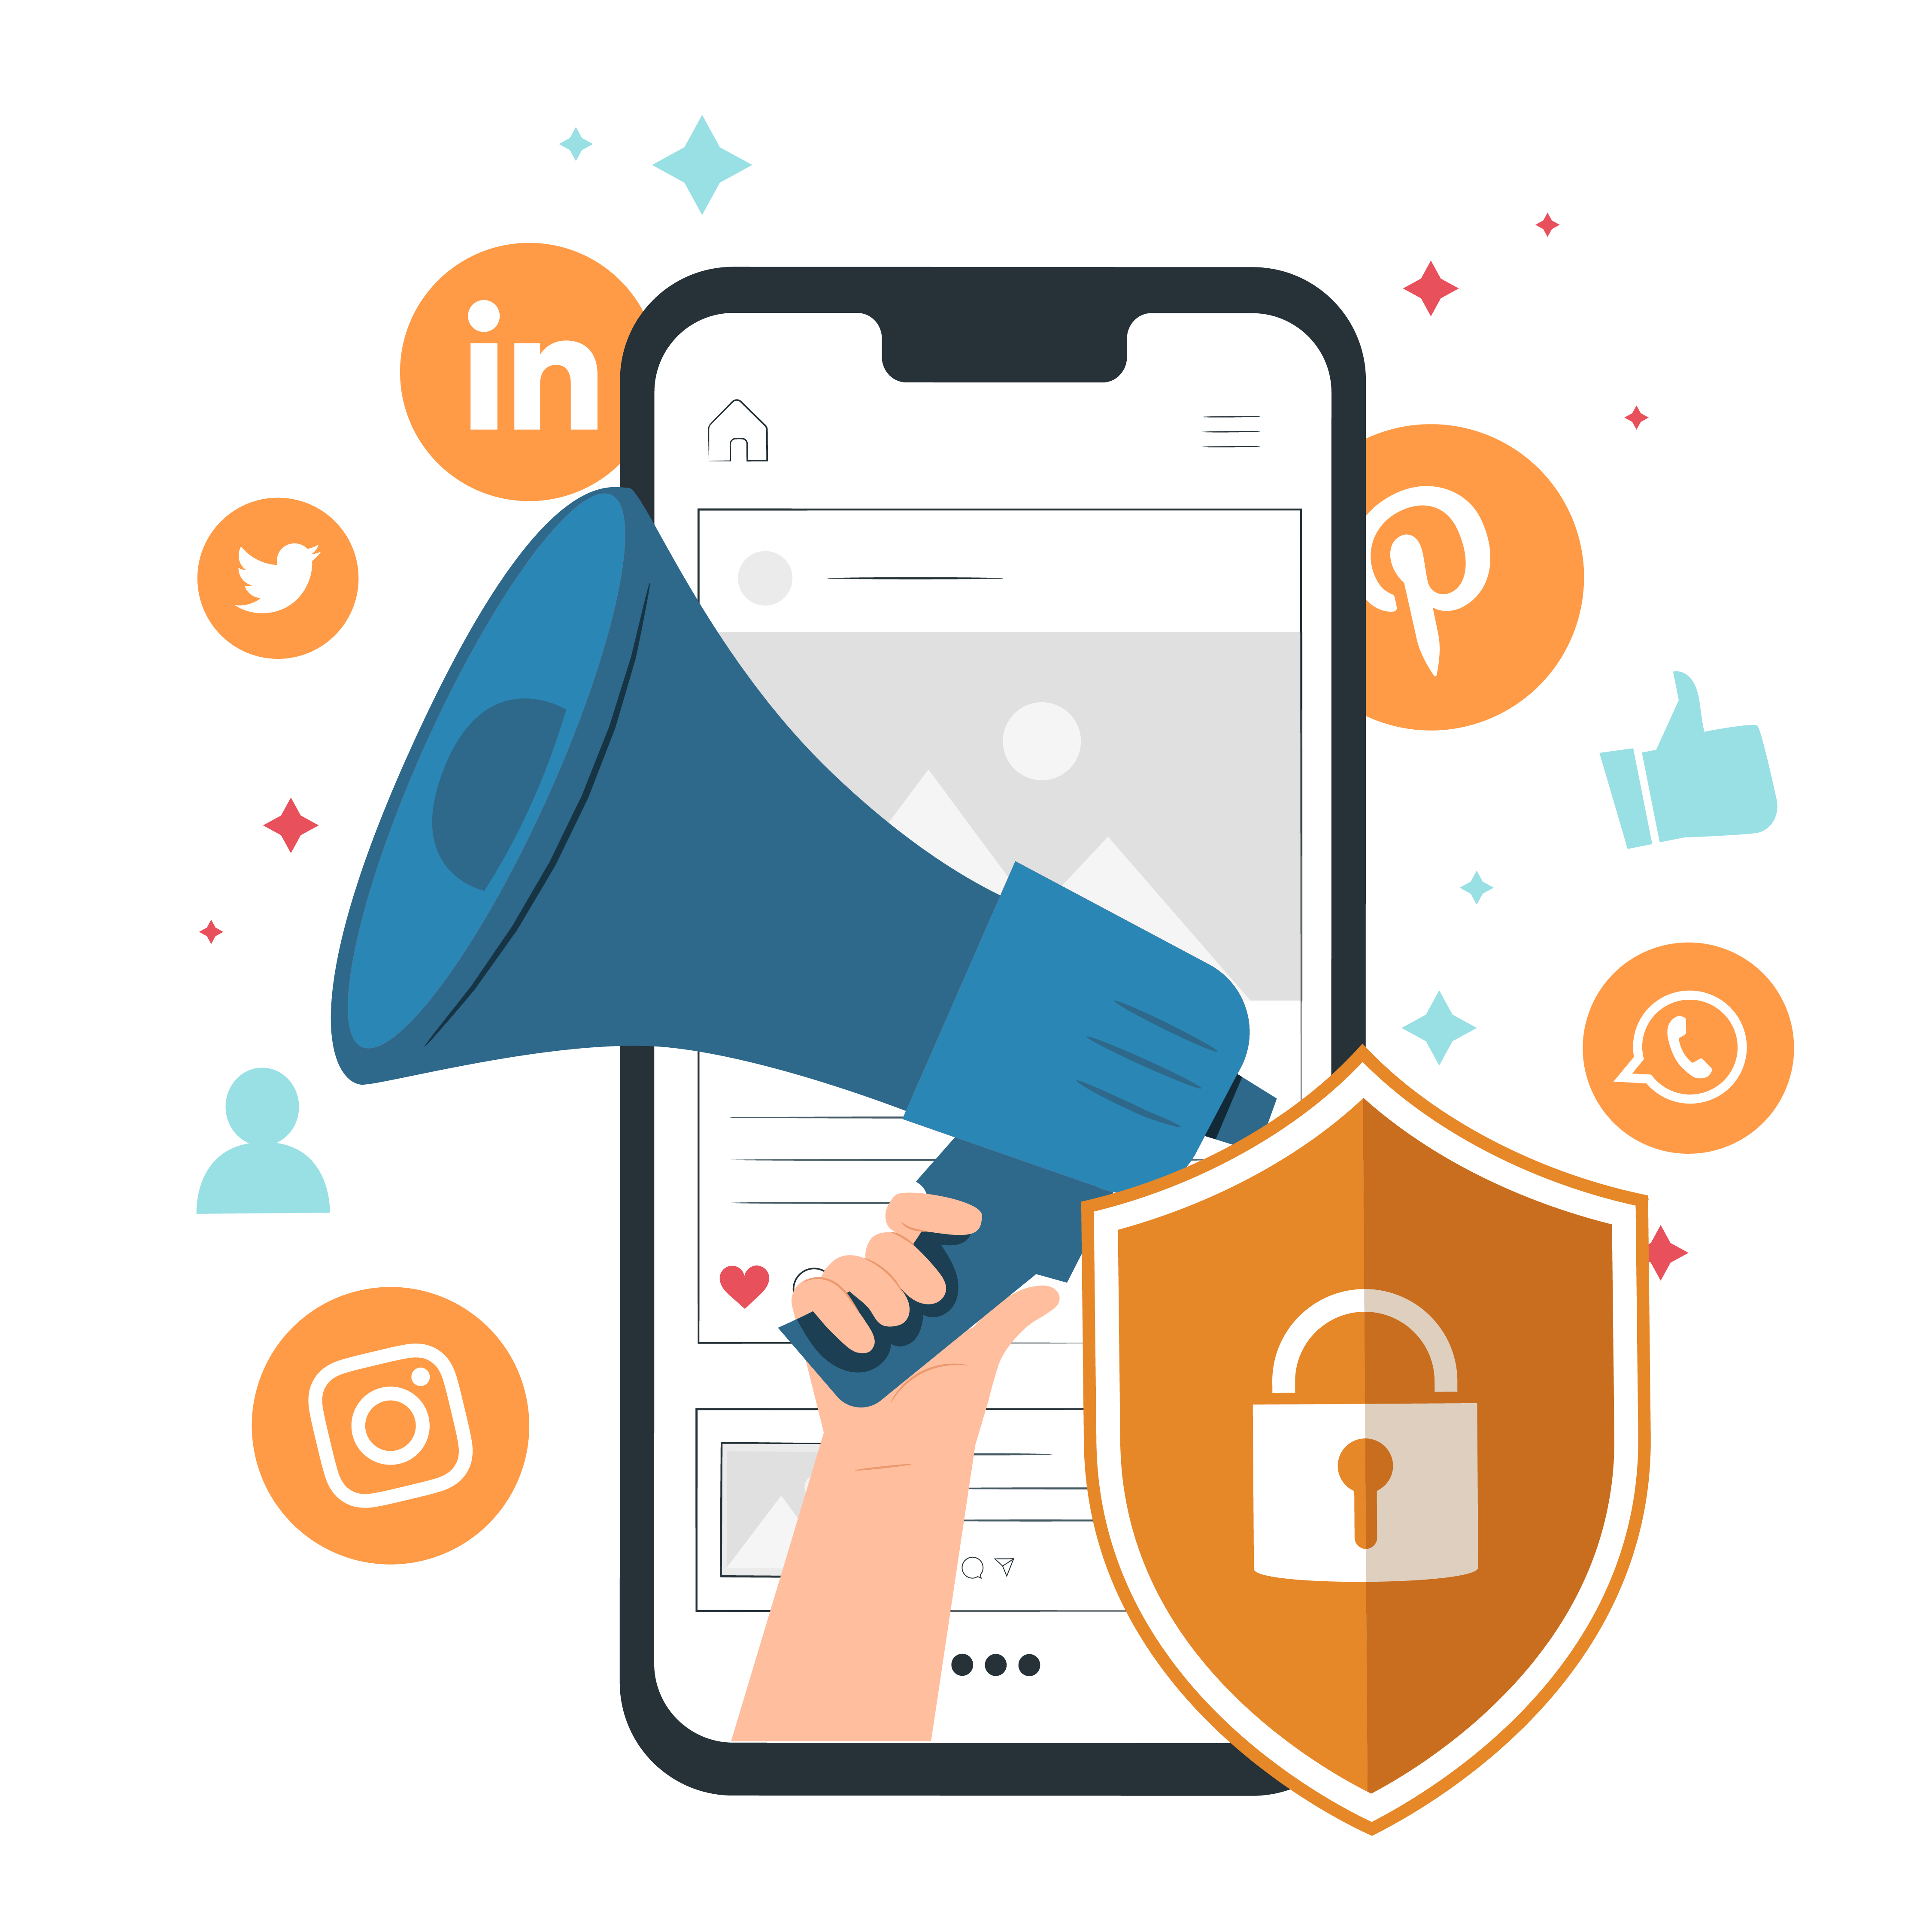 Protection on social media